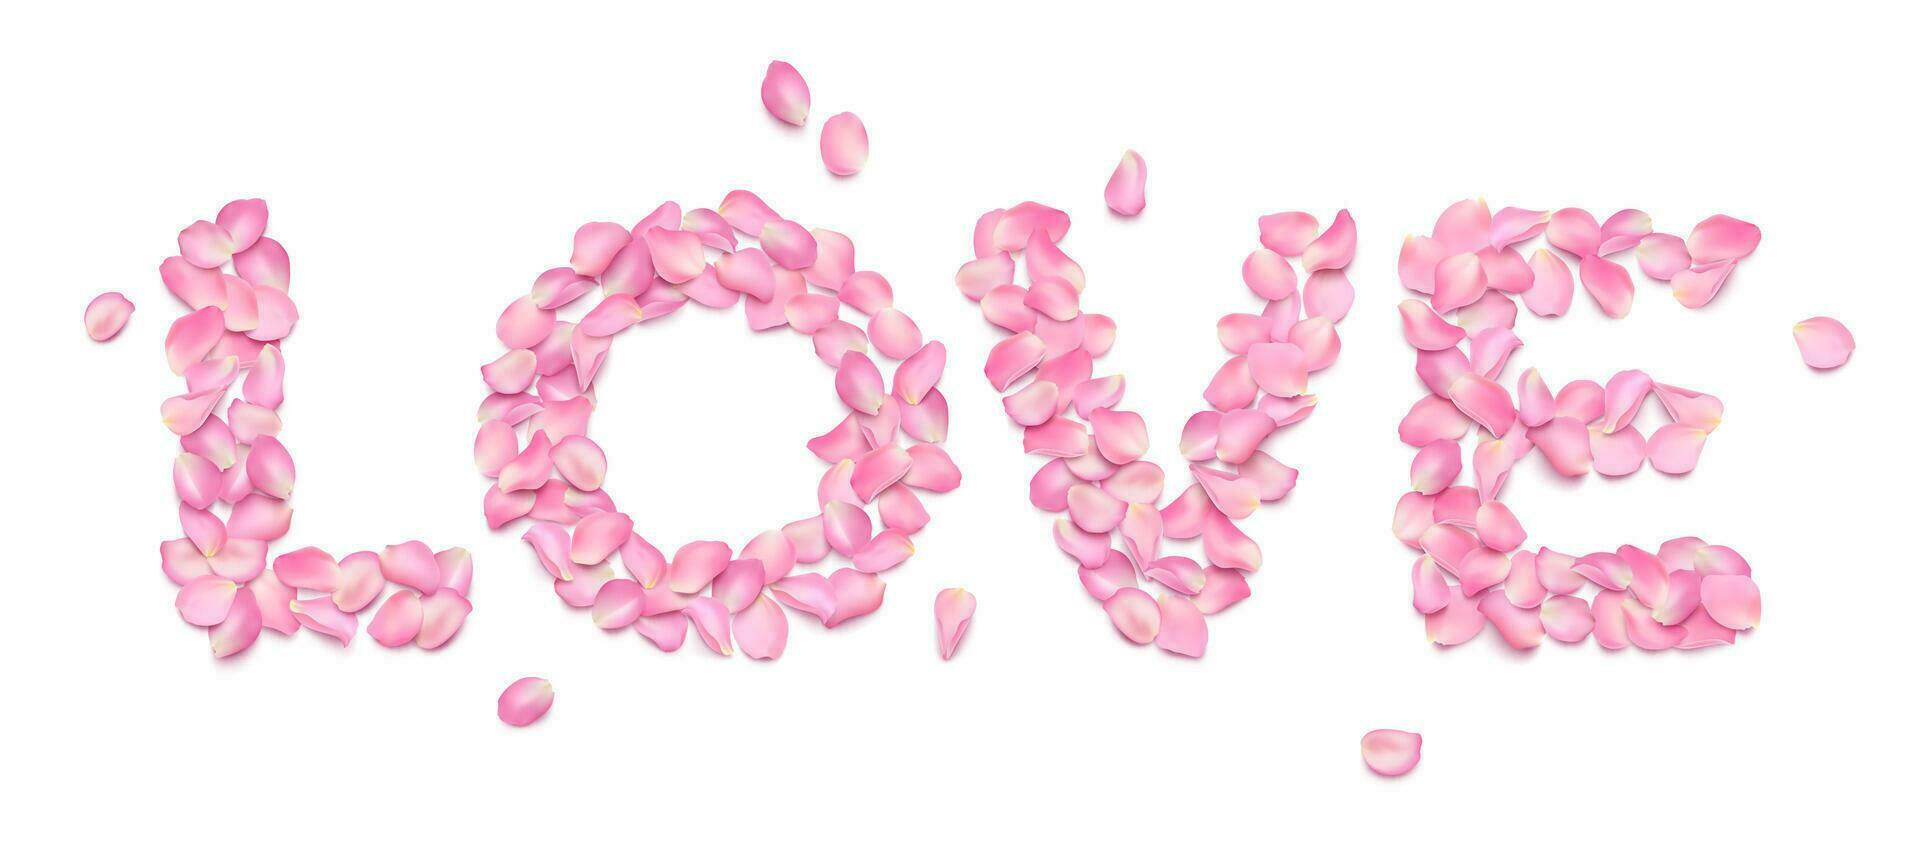 amor tipografía desde realista Rosa pétalos aislado en blanco antecedentes. rosado voluminoso sakura pétalos romántico inscripción para saludo tarjeta San Valentín día, marzo 8, Boda invitación. vector